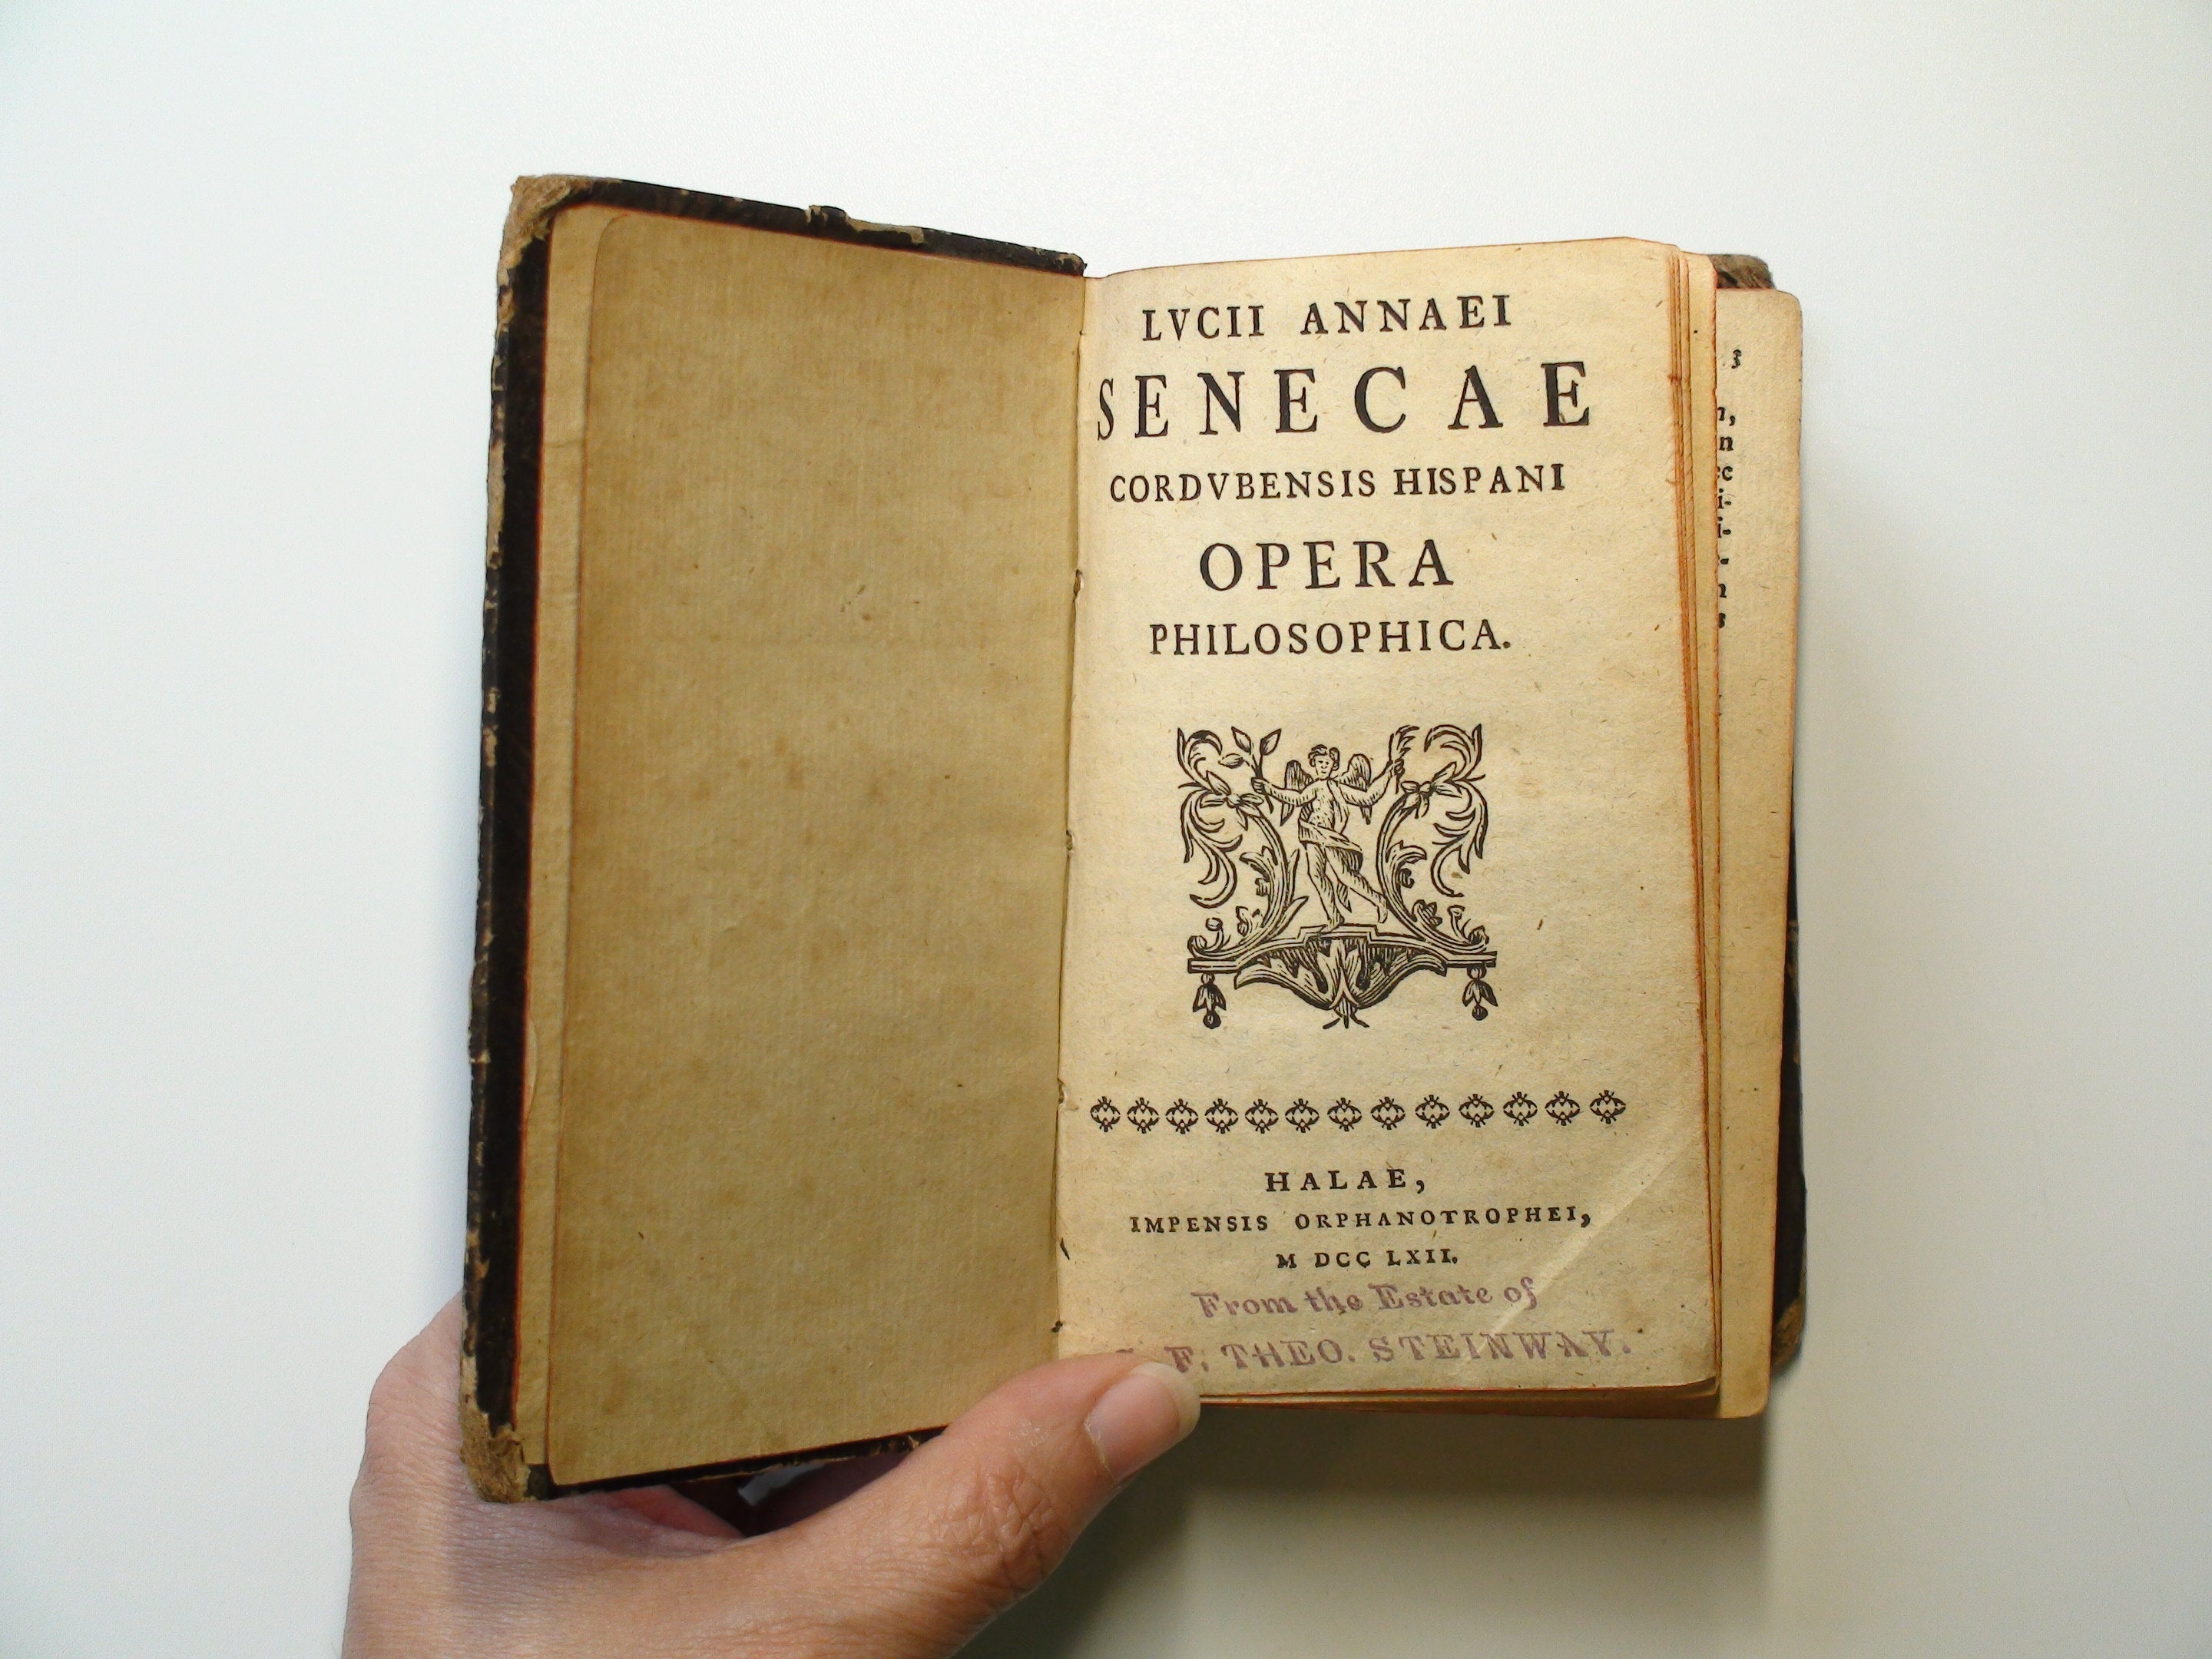 Lvcii Annaei Senecae Cordvbensis Hispani Opera Philosophica, 1762